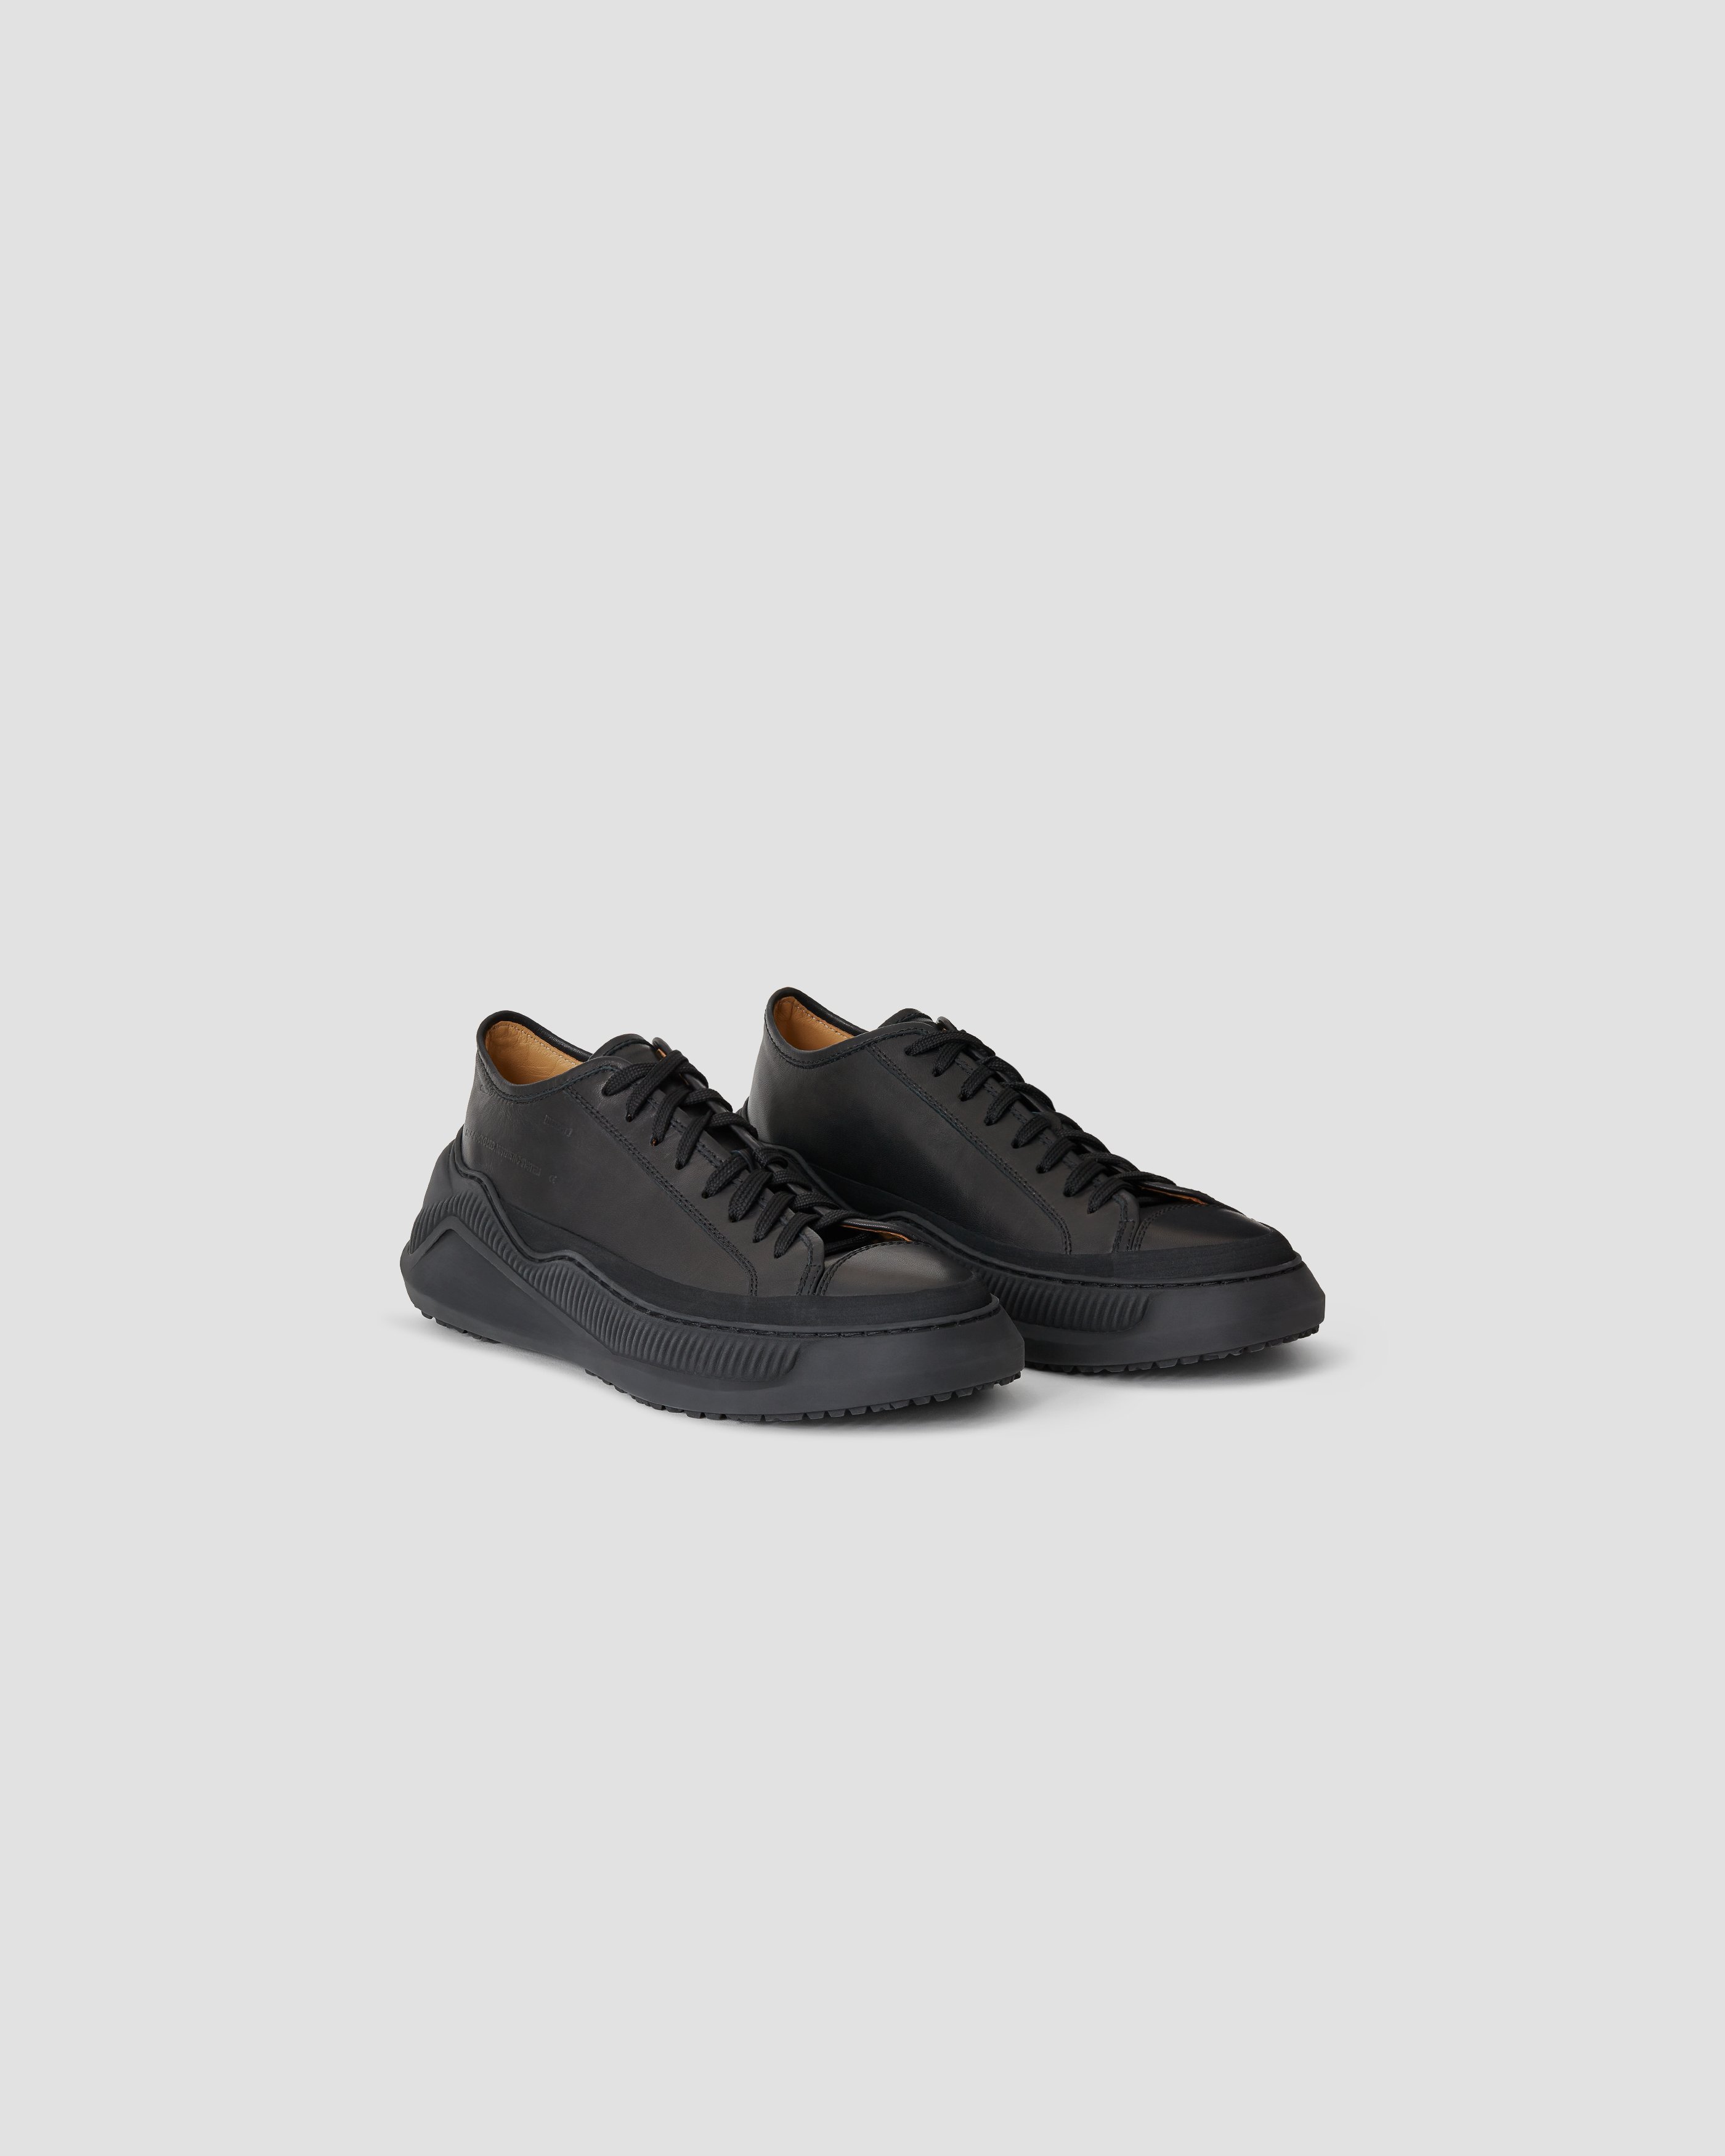 OAMC | REE SOLO LOW SNEAKER BLACK | 靴 | スニーカー | 通販 | オーエーエムシー | フリーソロ ロー  スニーカー・ブラック